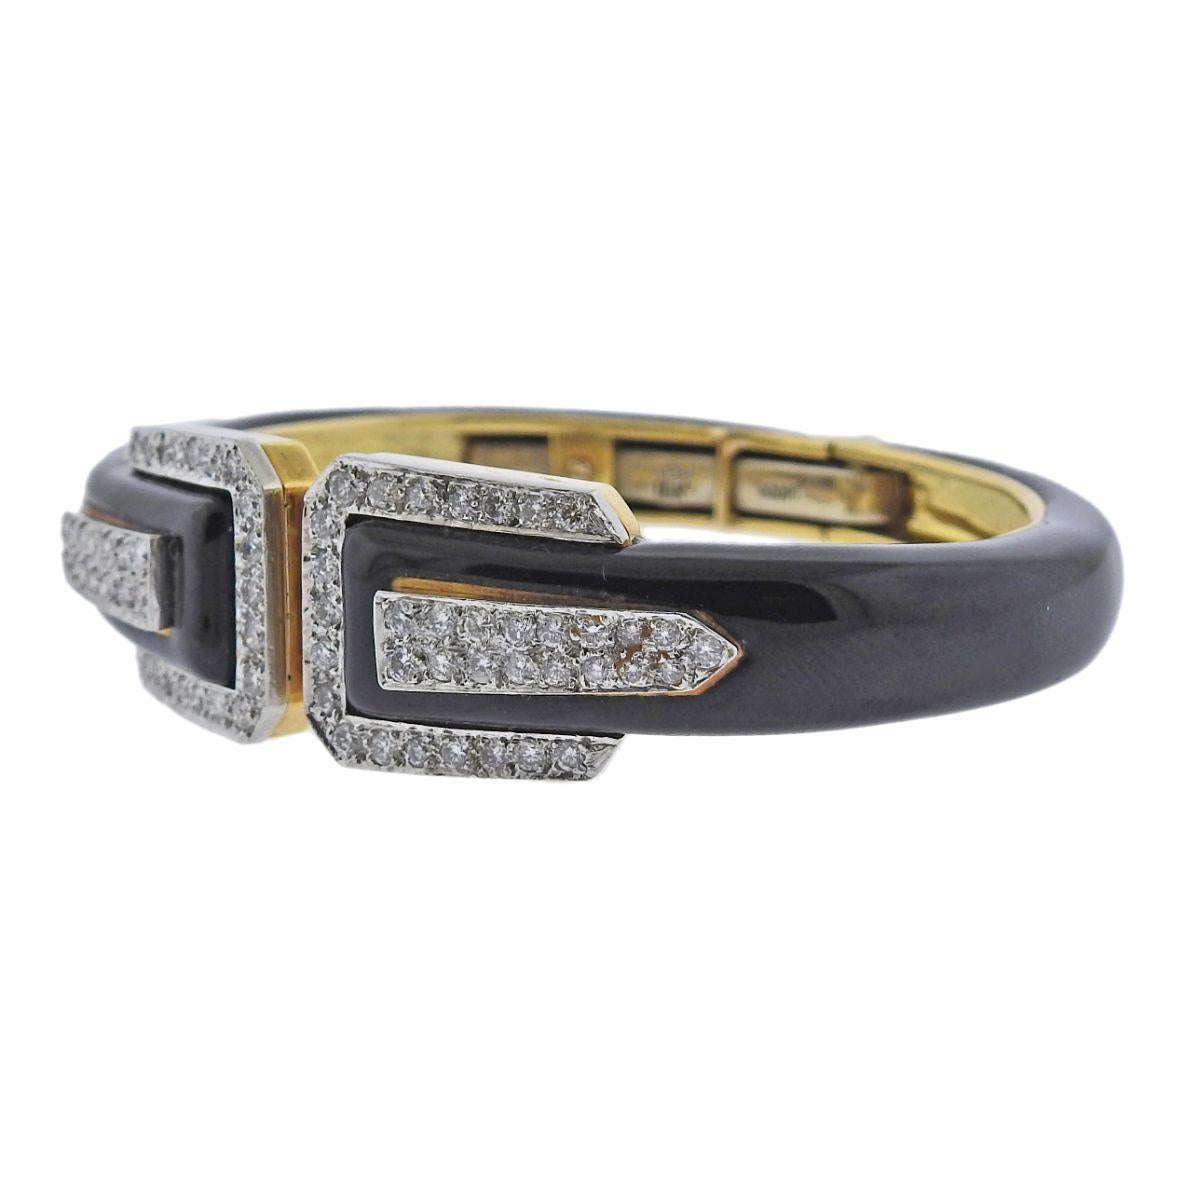 David Webb 18k gold and platinum bracelet, with black enamel, approx. 1.80ctw H/VS-Si1 diamonds. Bracelet will fit approx. 6.75